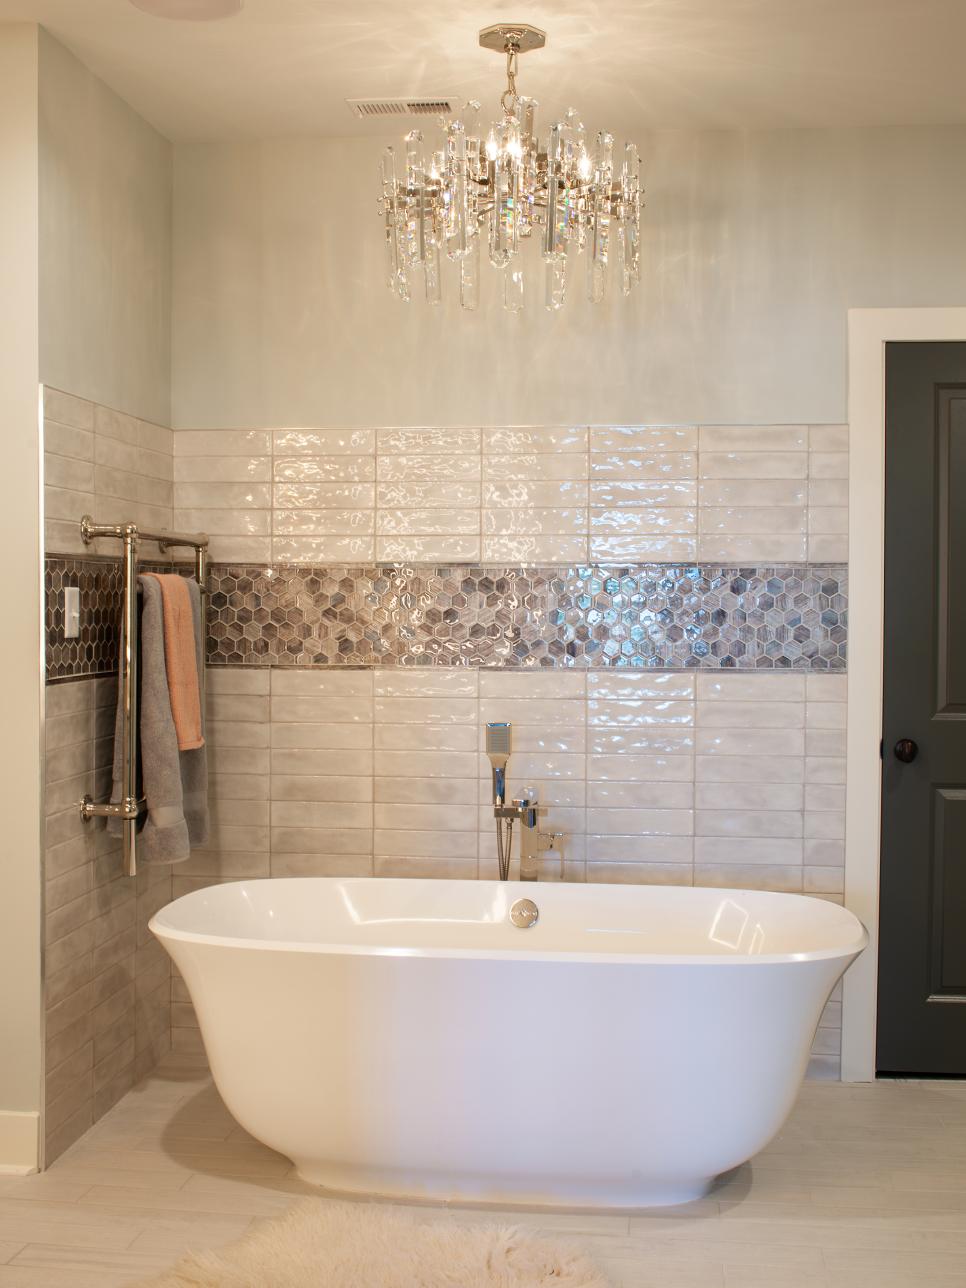 Neutral Spa Bathroom With Chandelier | HGTV